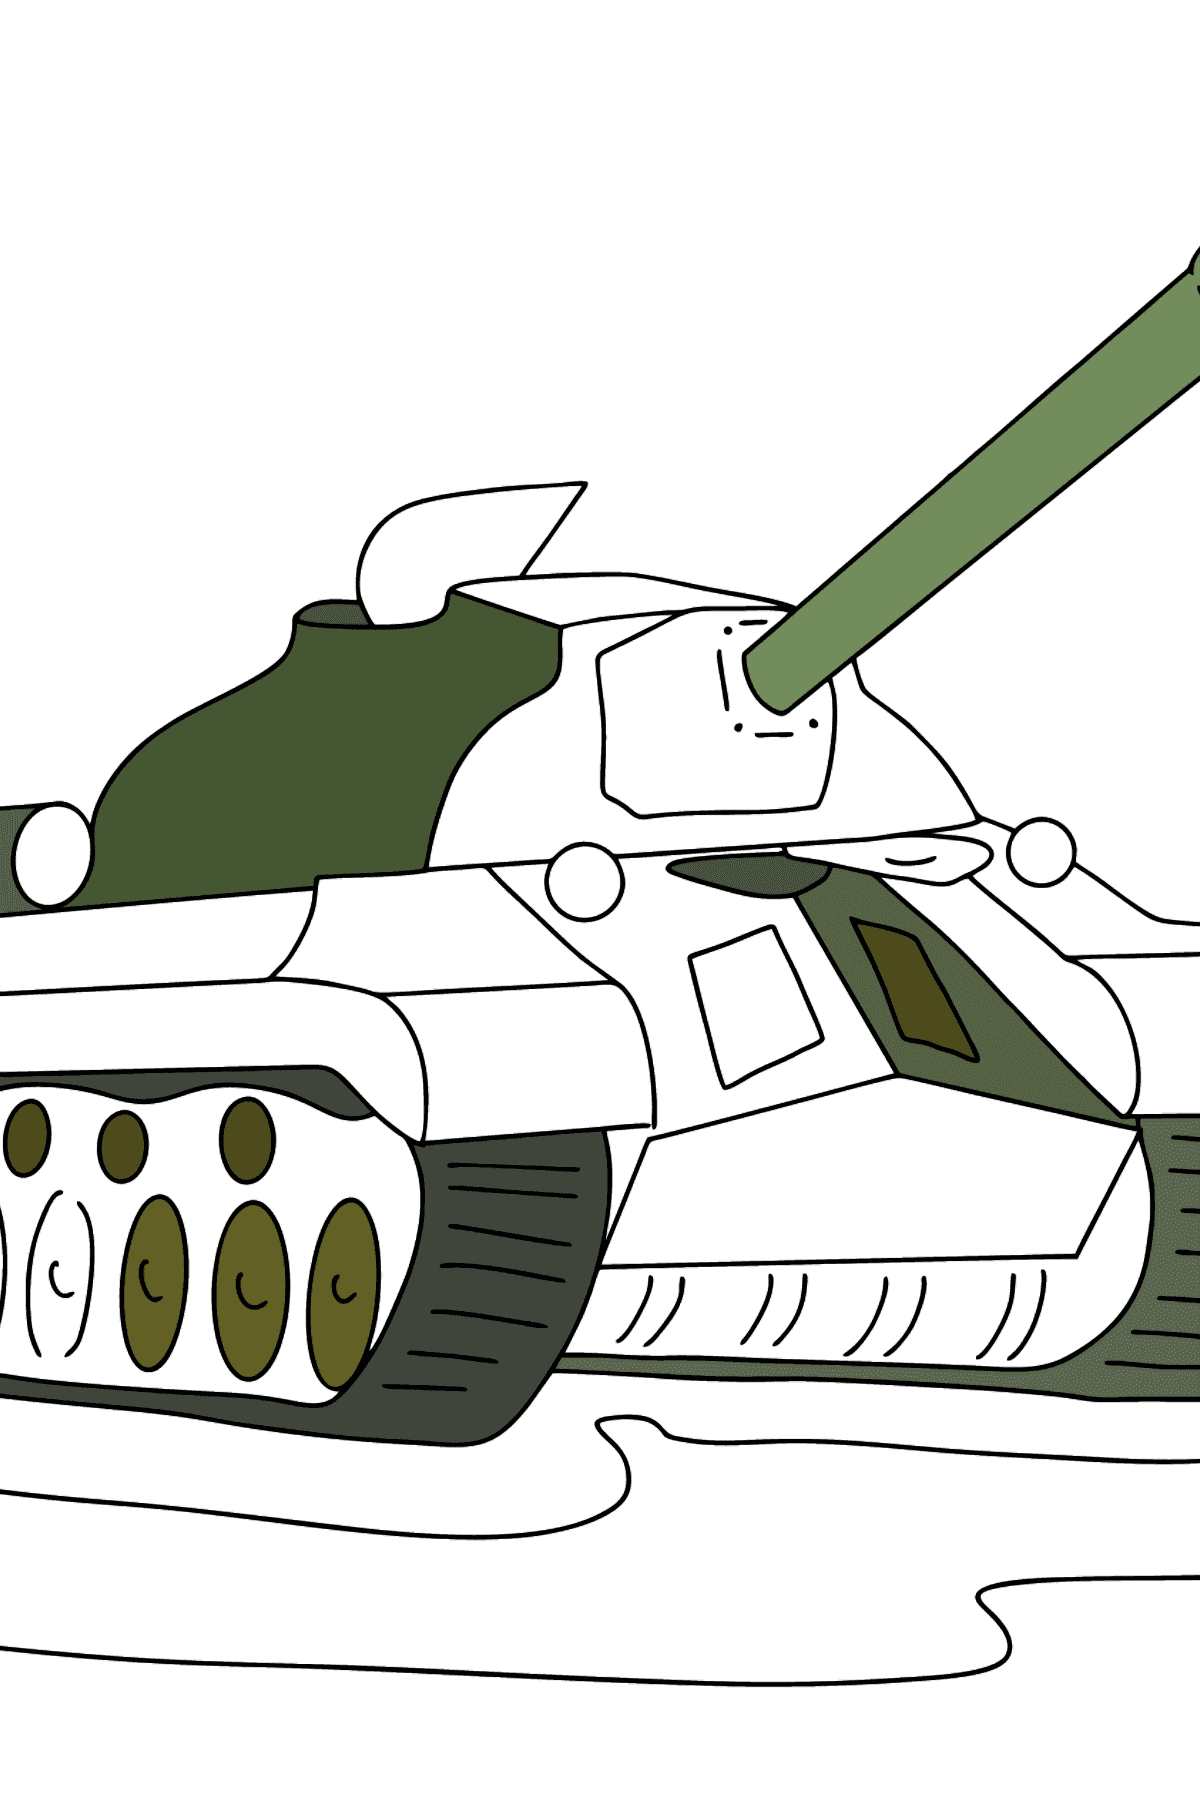 Páginas para colorir de Tank IS 3 - Imagens para Colorir para Crianças